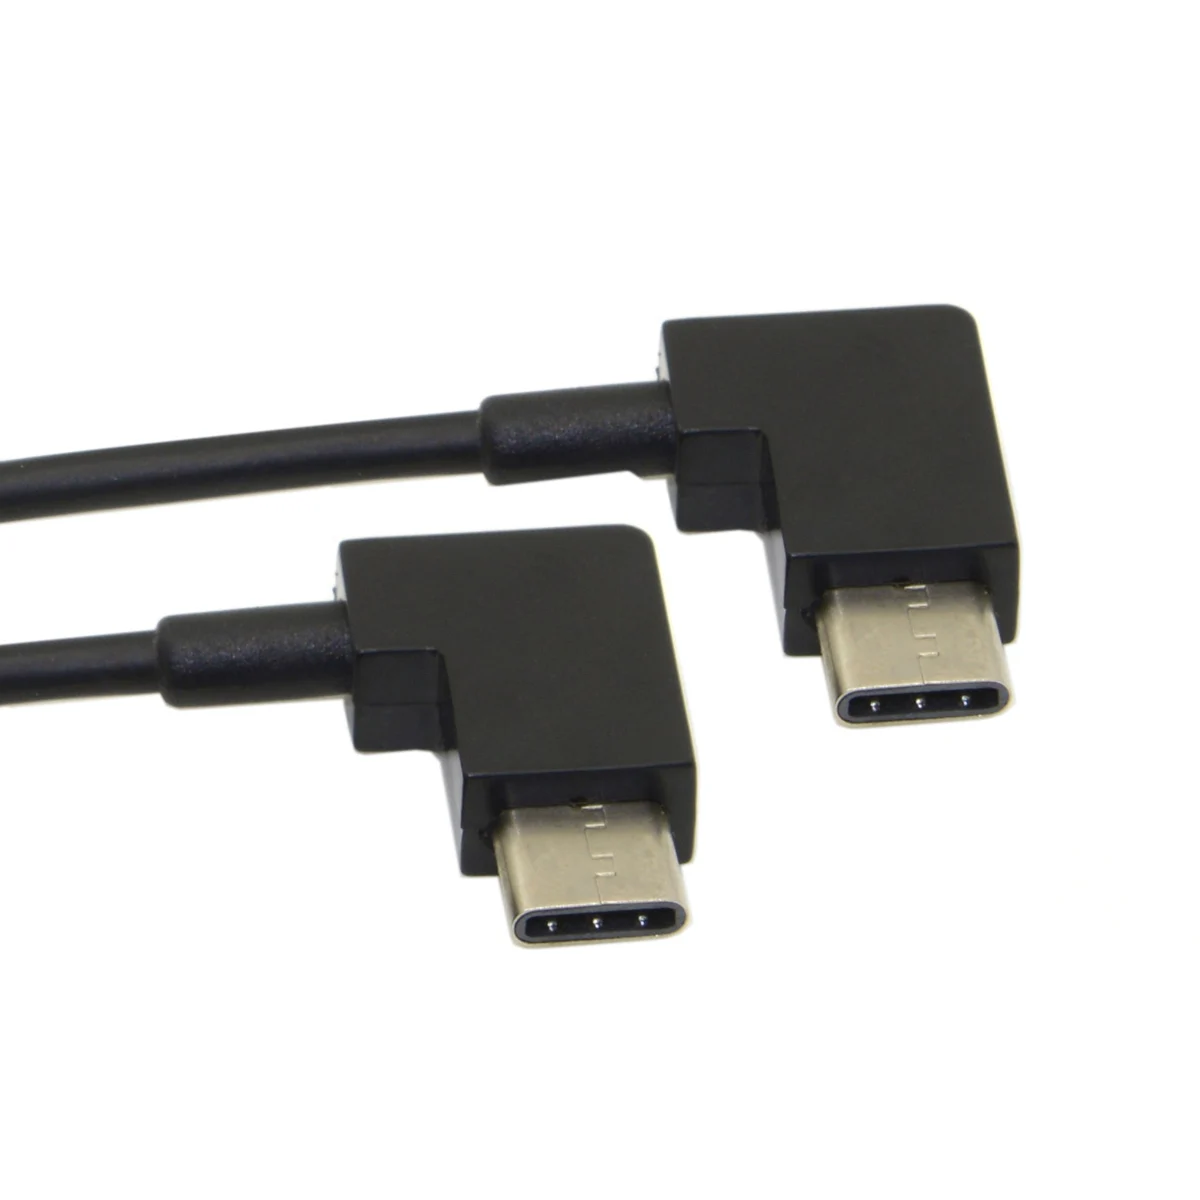 Cablecc Тип с разъемами типа C и Тип-C кабель для дистанционного управления FPV DJI Mavic Pro